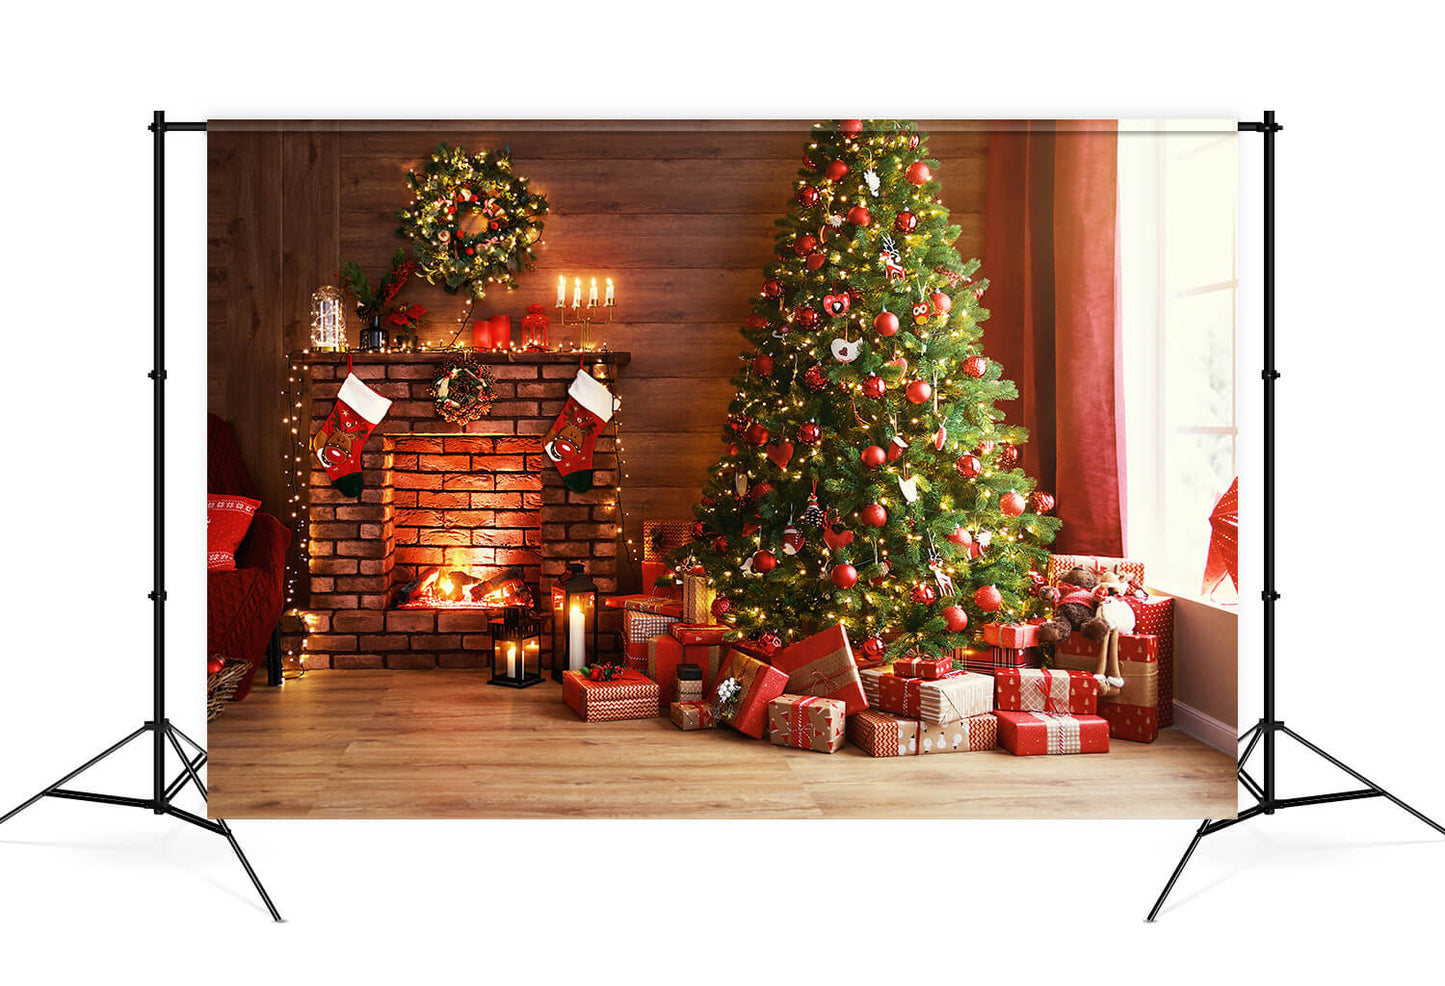 Christmas Glowing Tree Fireplace Gifts Backdrop M9-81